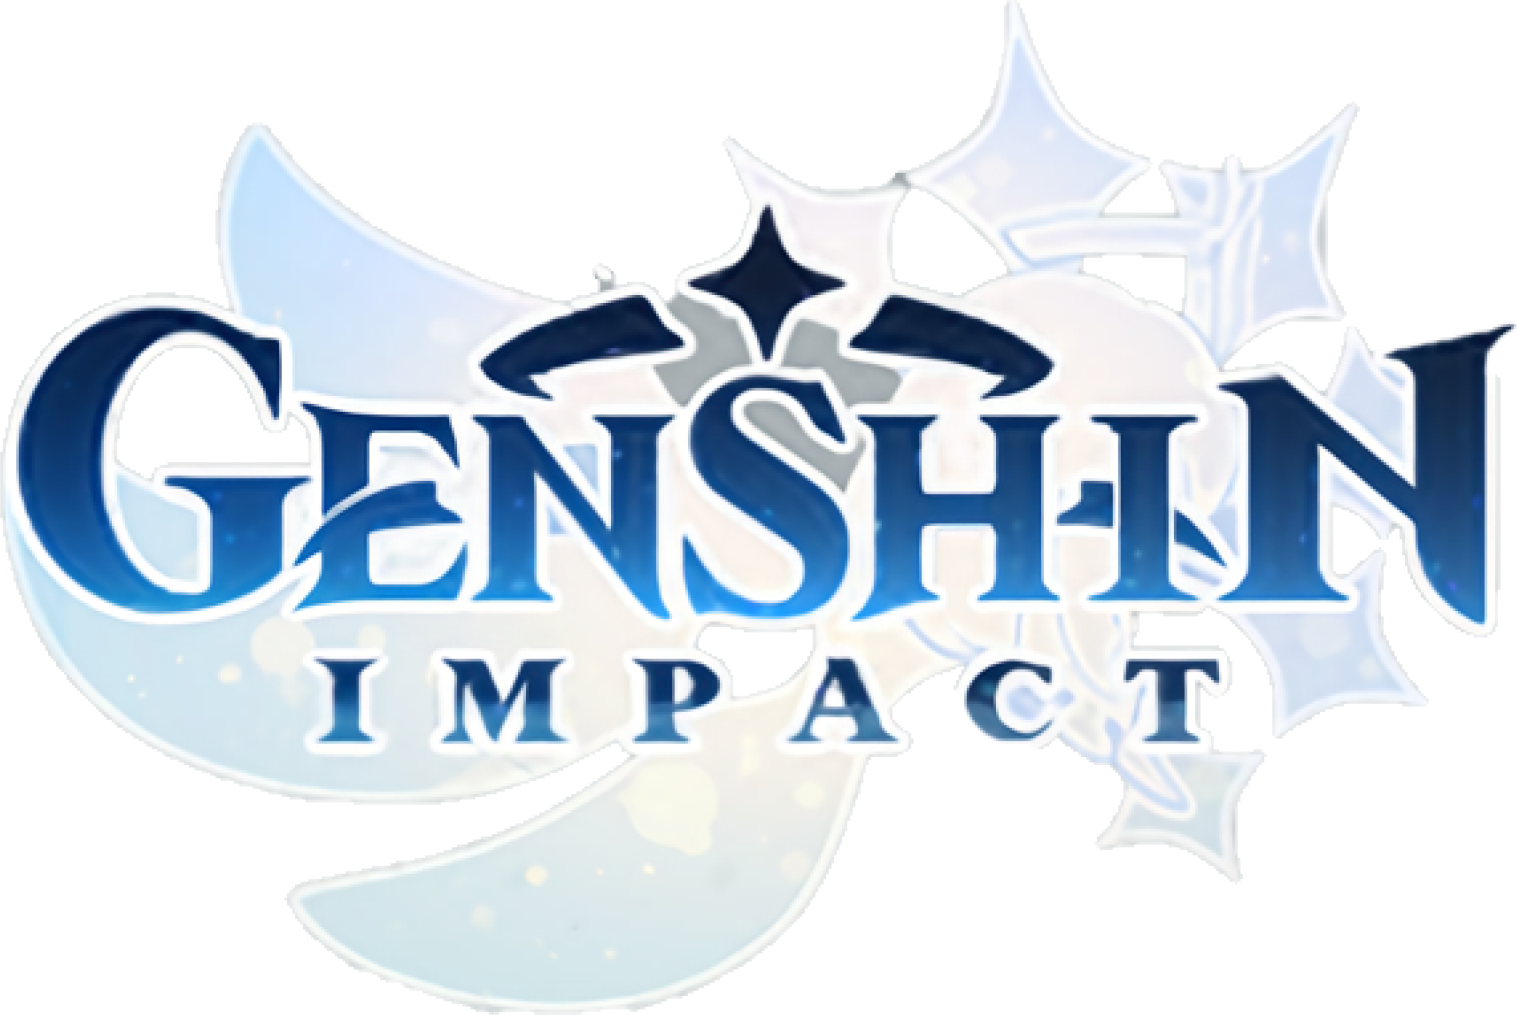 Genshin icon. Геншин Импакт лого. Логотип Геншин импаксэт. Геншин игра лого. Логотип игры Genshin Impact.